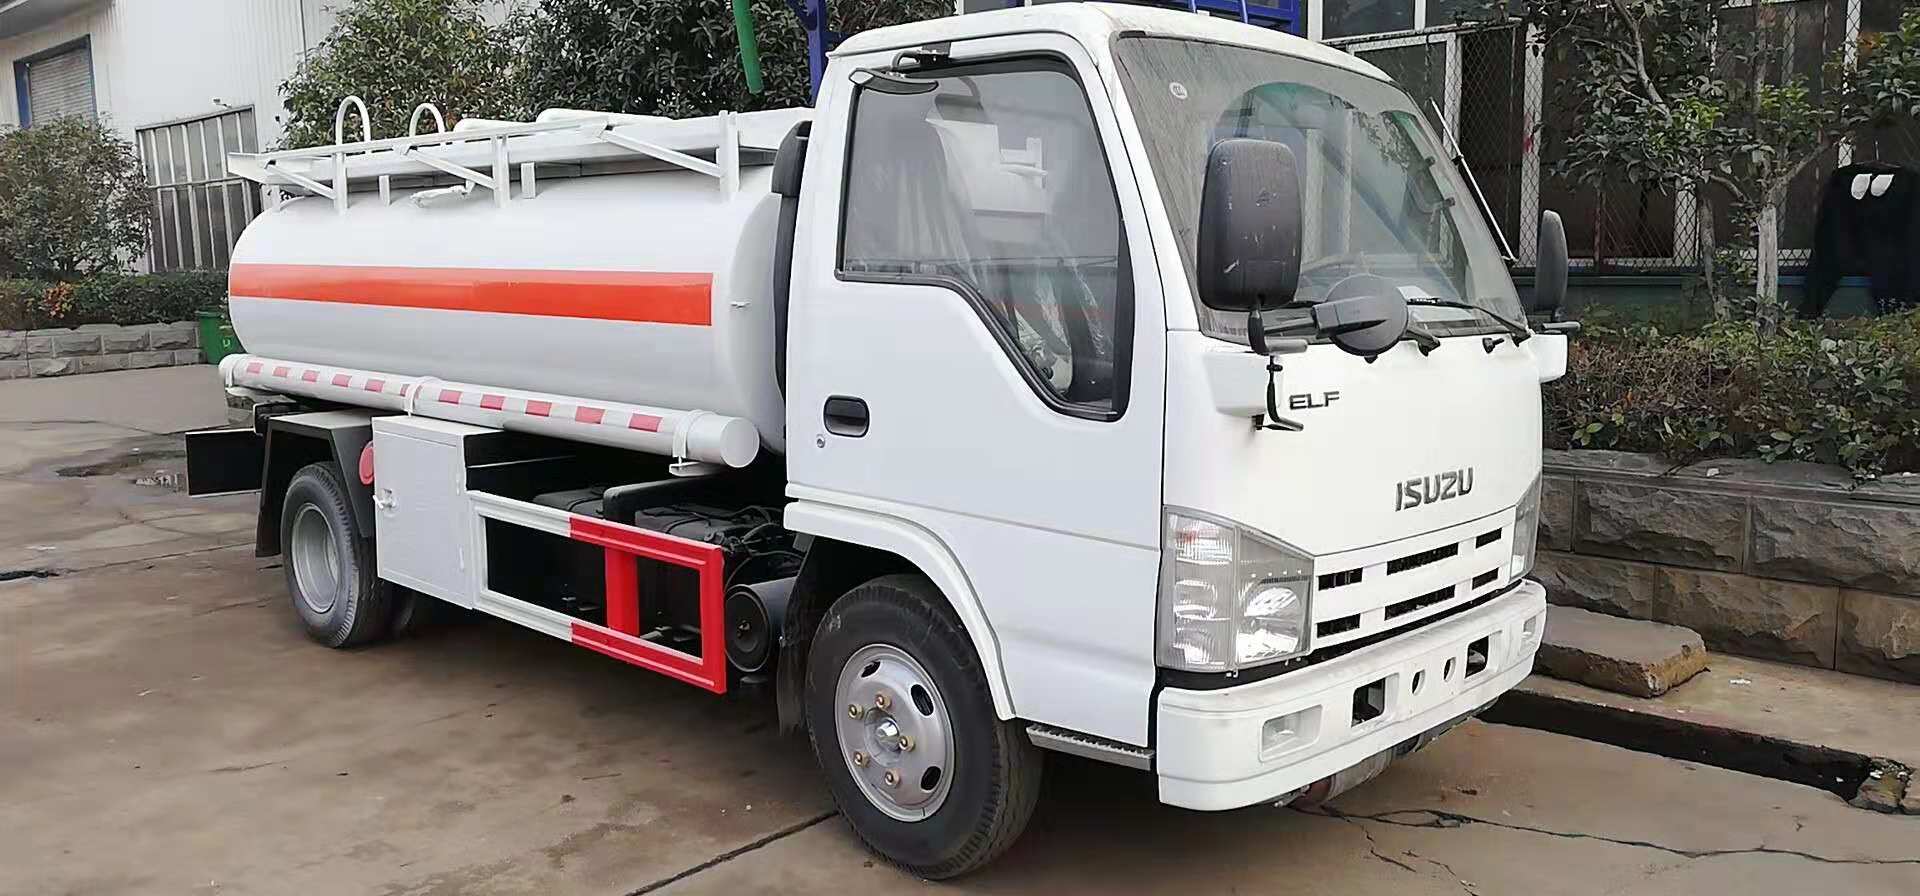 Japan Brand 5000 Liters Fuel Tanker Truck for Refueling